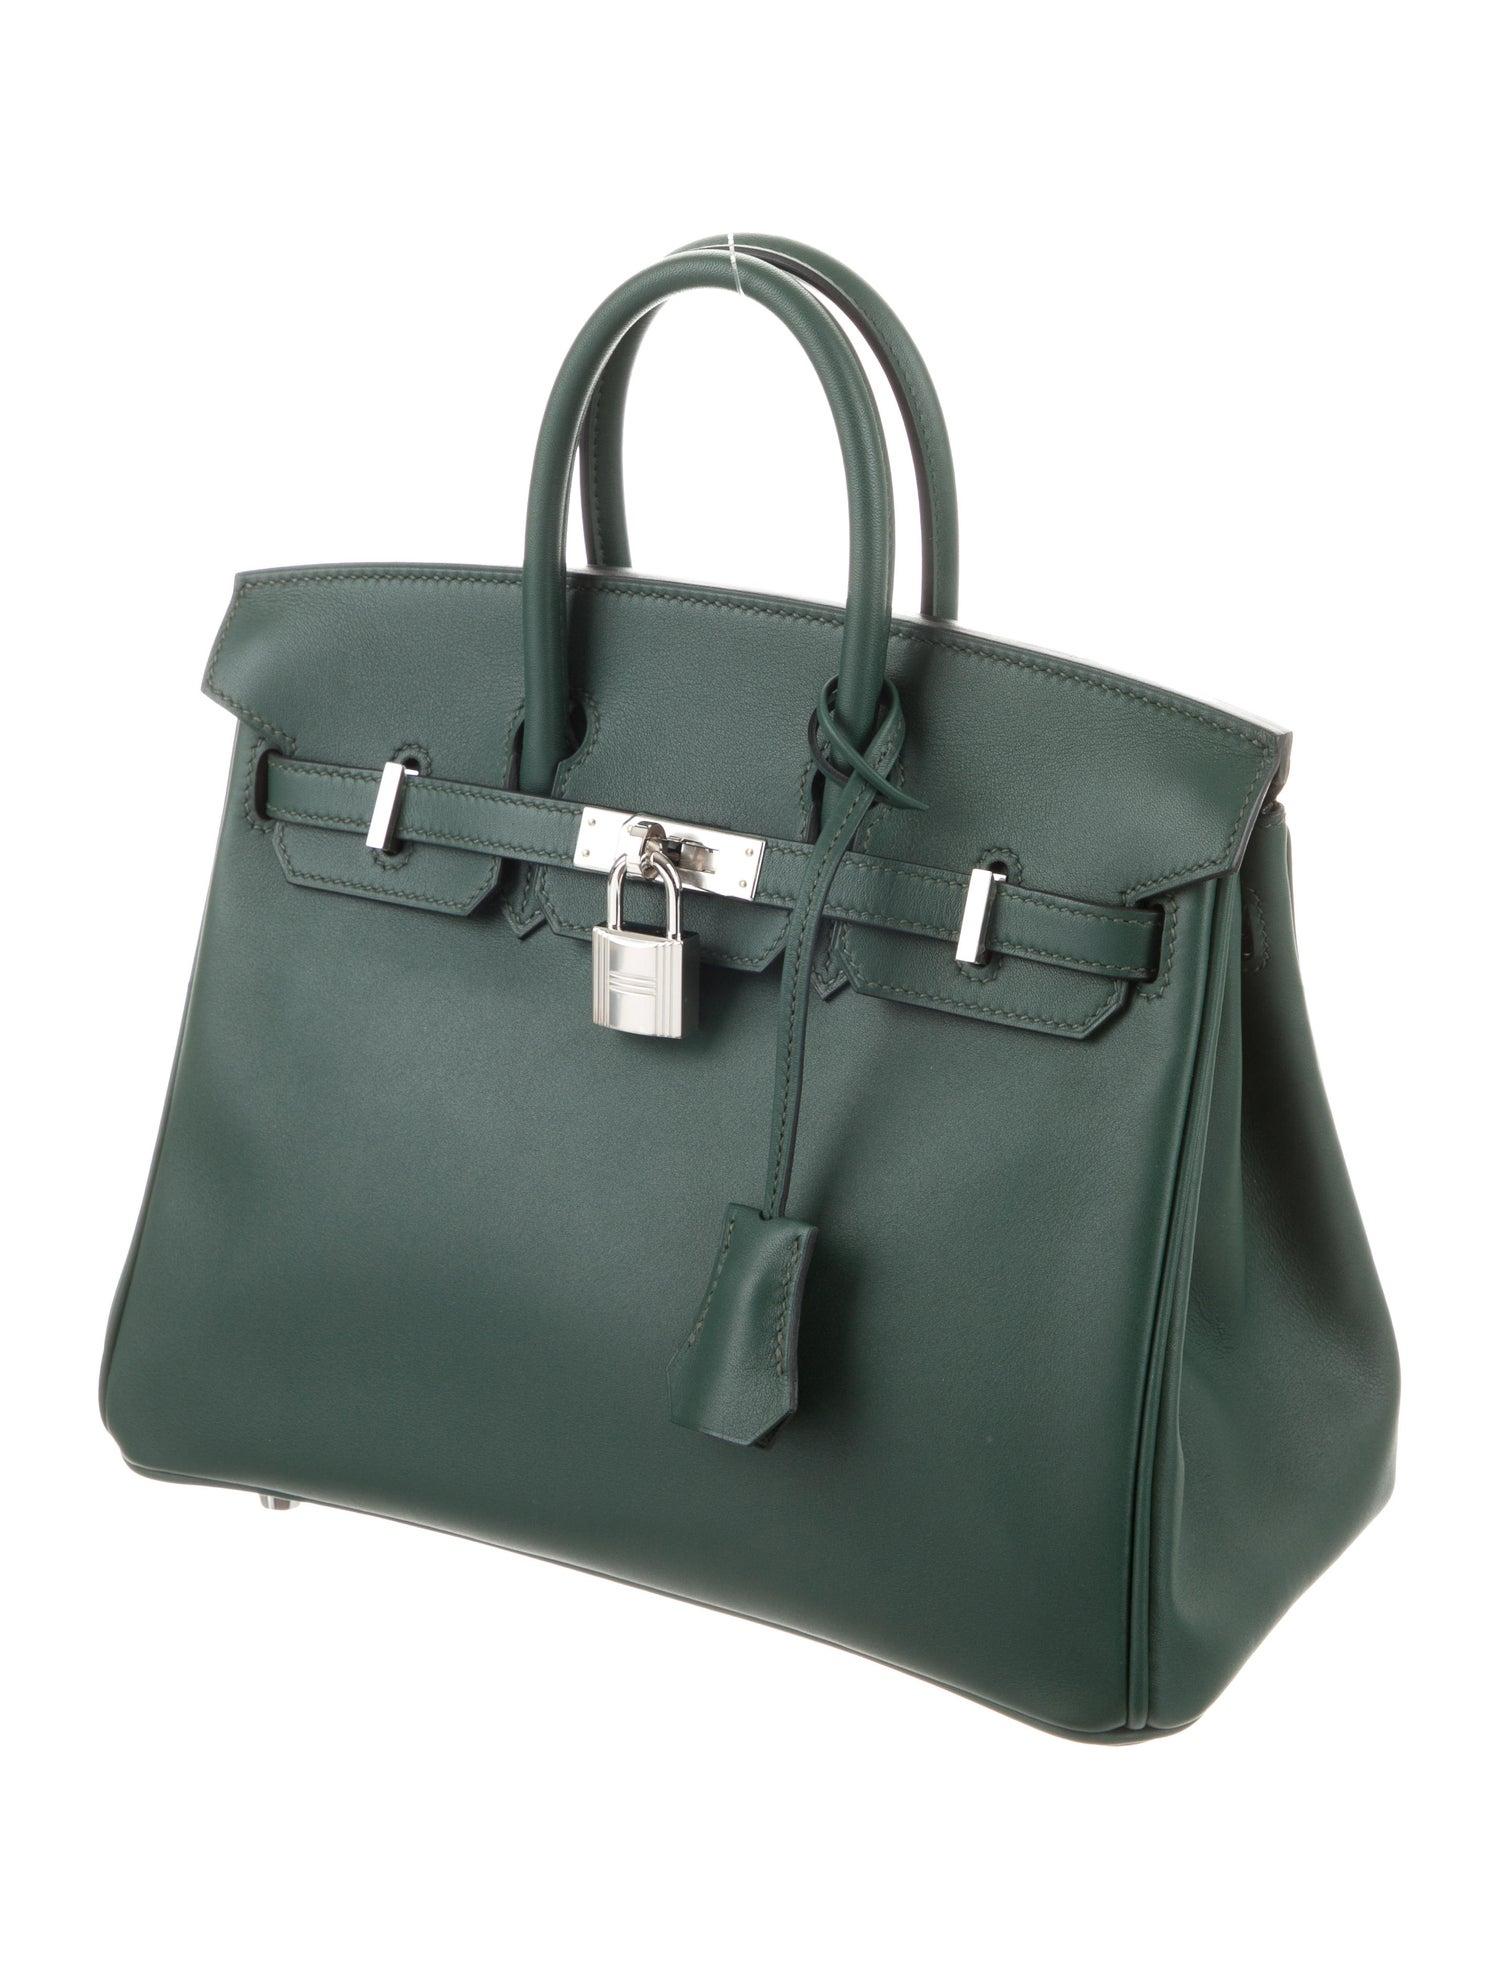 Black Hermes NEW Birkin 25 Green Leather Top Handle Tote Satchel Shoulder Bag in Box